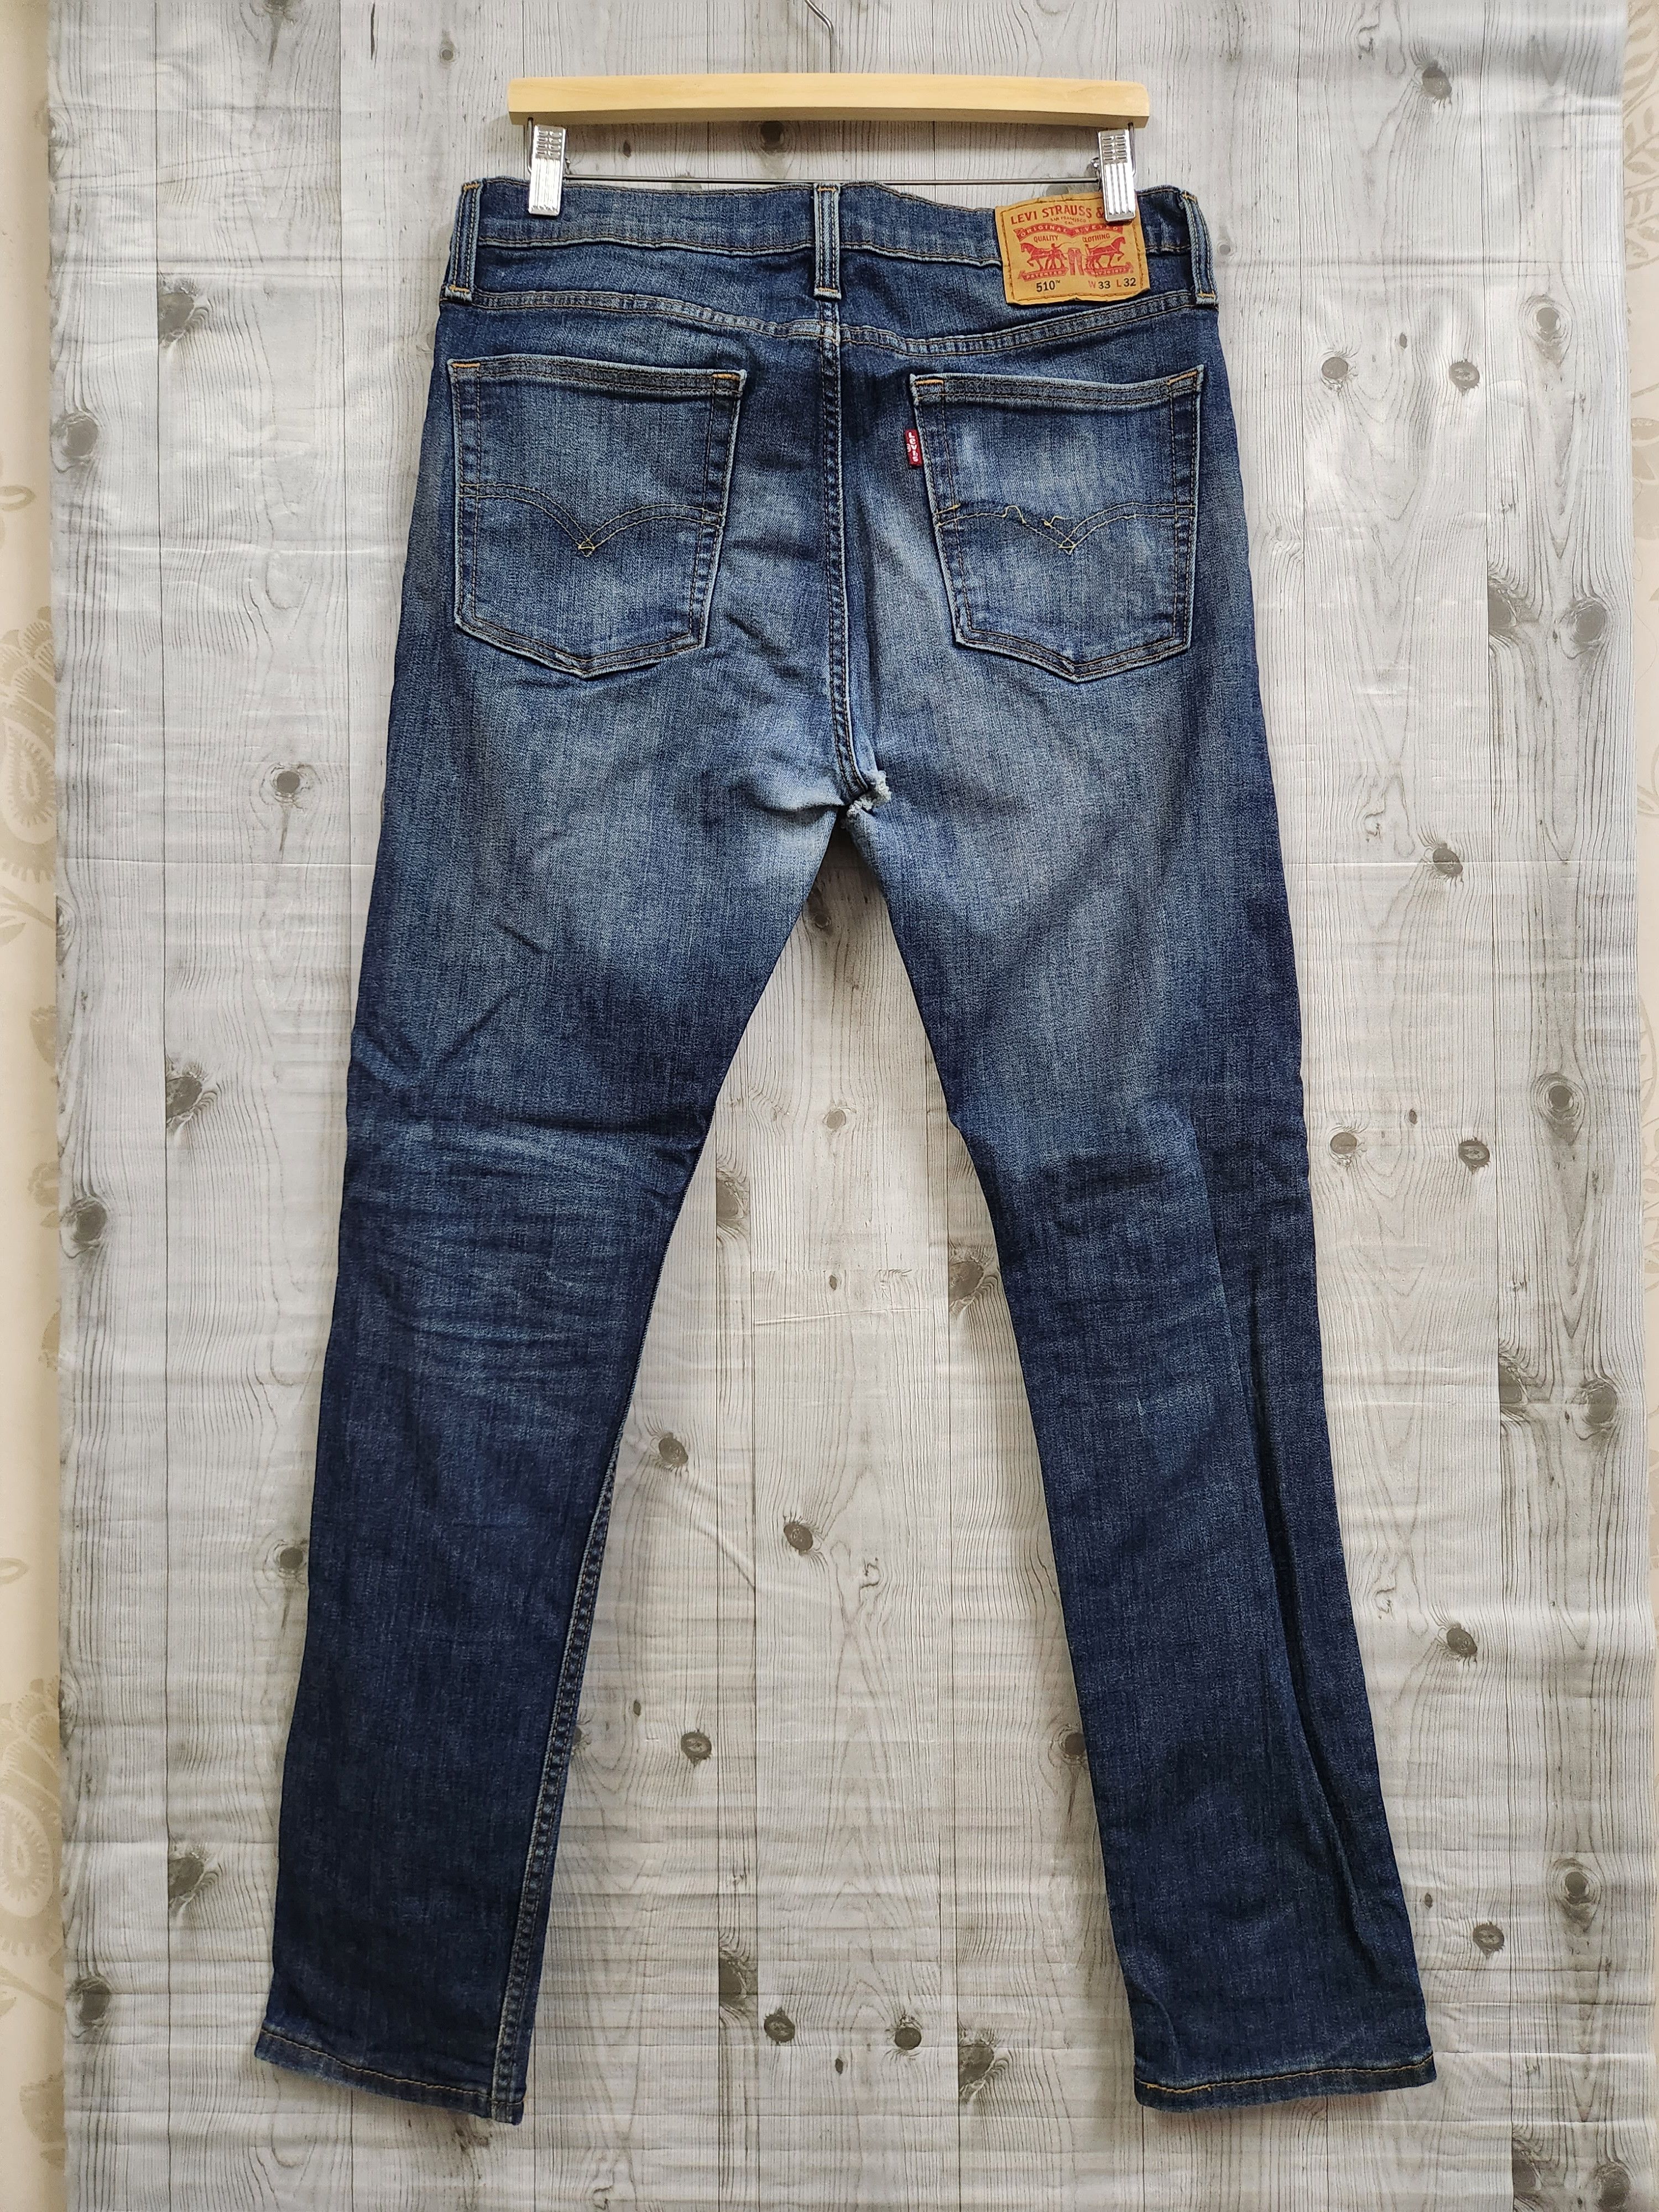 Levi's 510 Blue Denim Jeans - 8